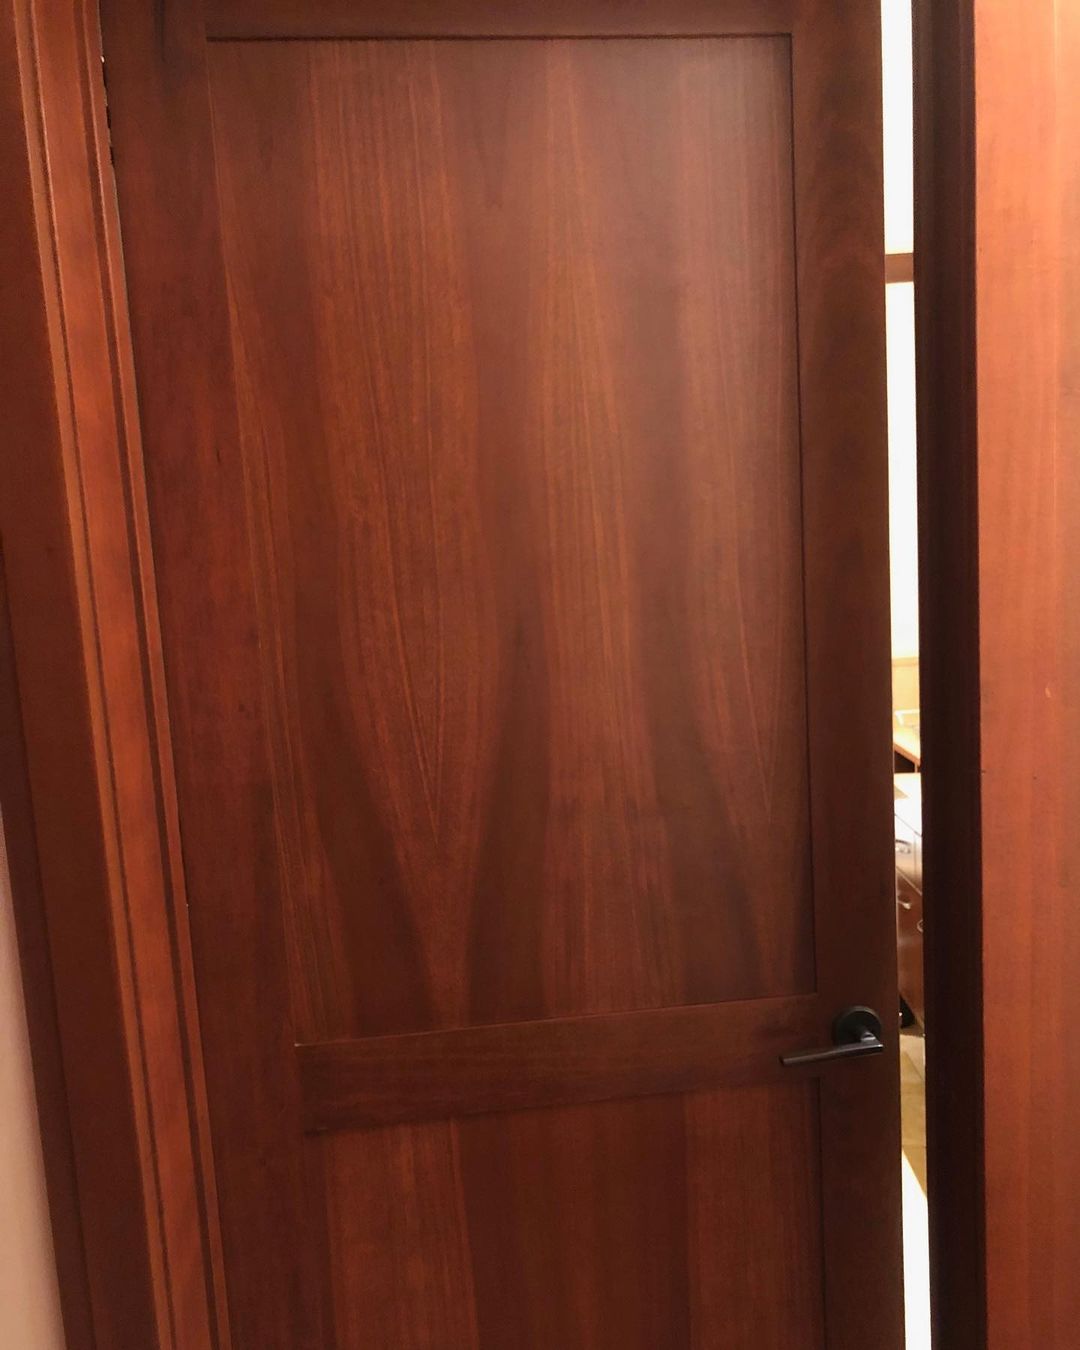 Бритни поделилась историей о заблокированной двери в ванной комнате во  время отдыха на Гавайях - 2 Августа 2021 - Фан-сайт Бритни Спирс Britney  Spears Брітні Спірс Последние новости, фото, видео, музыка